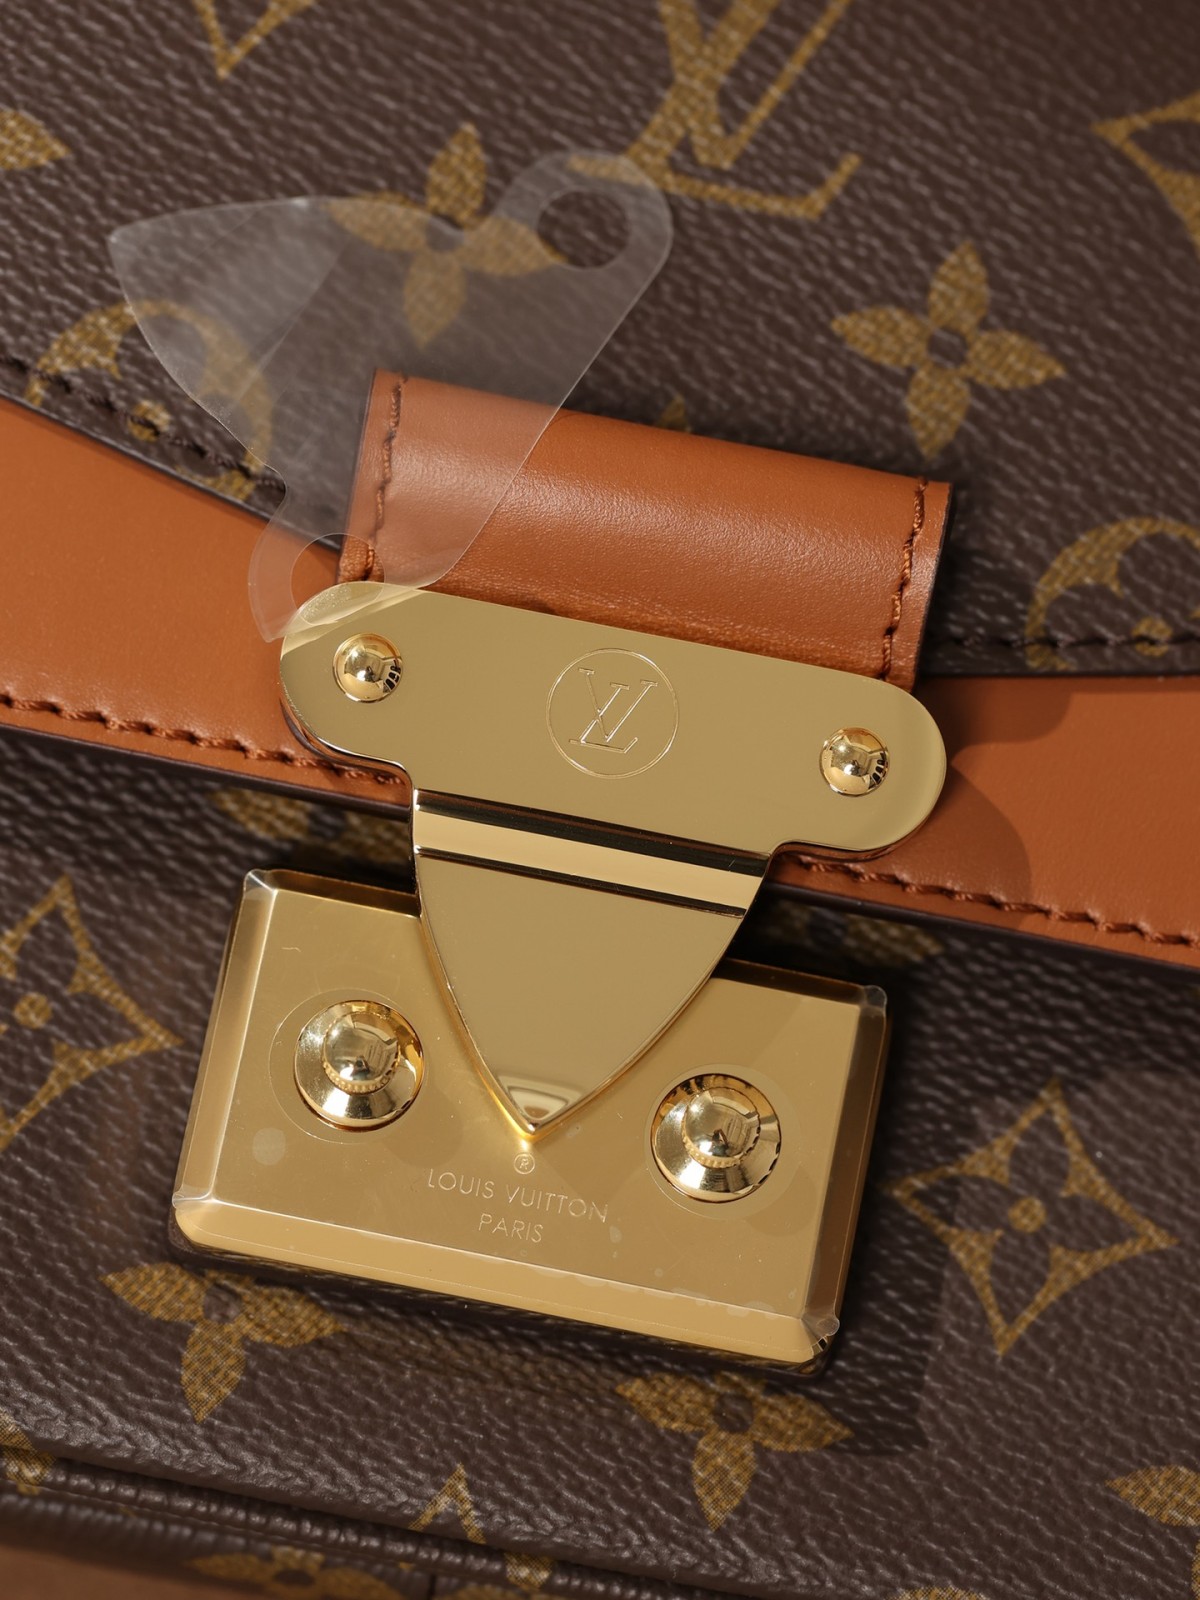 LV Marceau Bag Replication: Shebag Company’s Excellence（2023 Week 43）-Paras laatu väärennetty Louis Vuitton laukku verkkokauppa, replika suunnittelija laukku ru